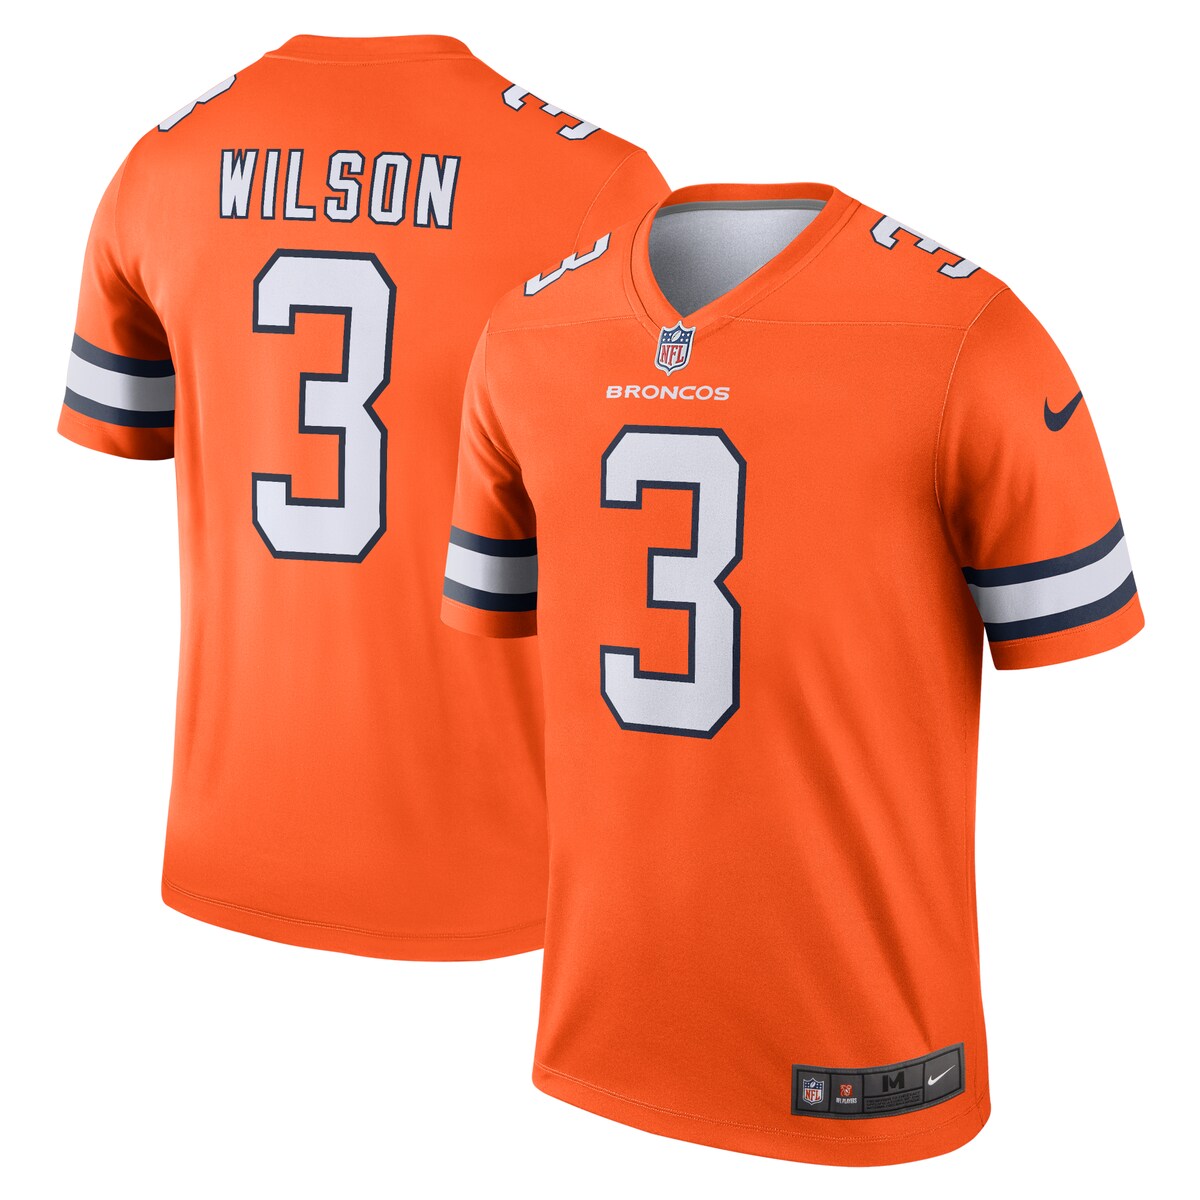 NFL ブロンコス ラッセル・ウィルソン ユニフォーム Nike ナイキ メンズ オレンジ (Men's Nike Legend Jersey)